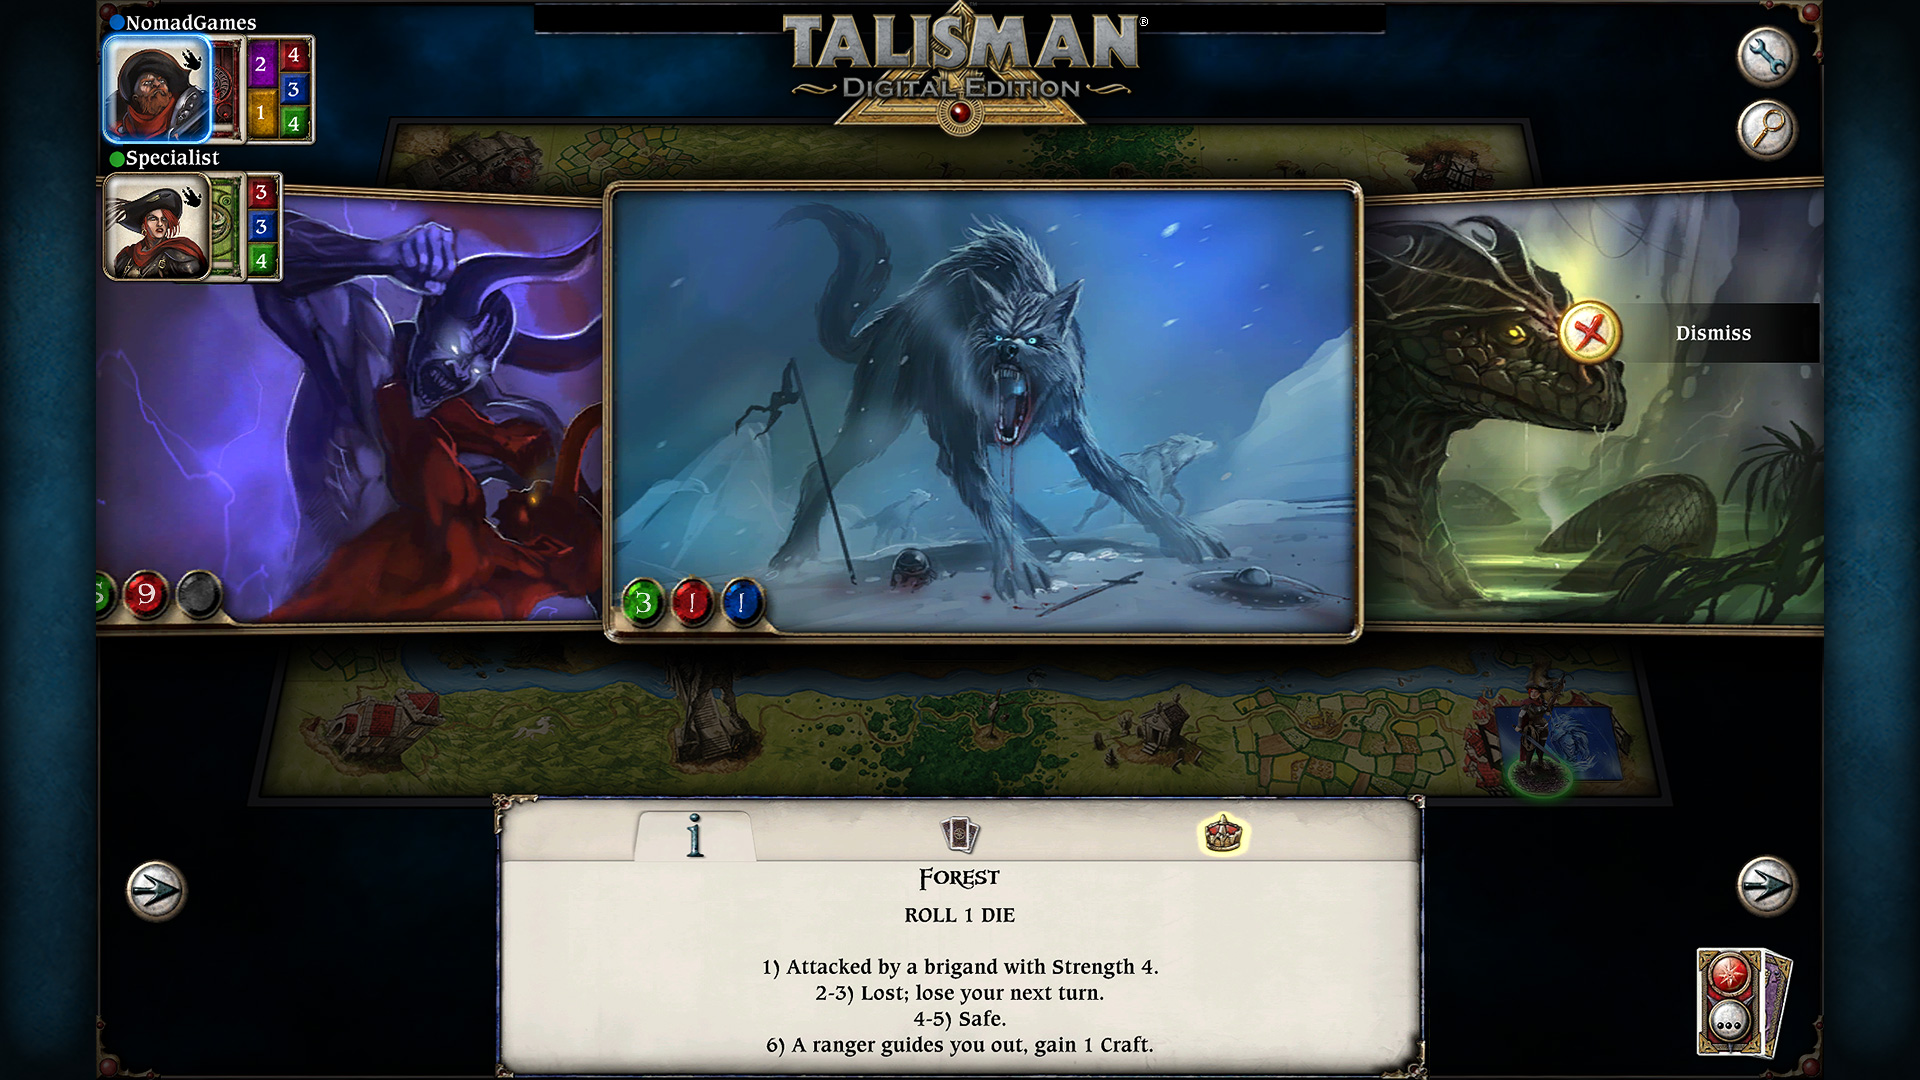 [$ 2.34] Talisman - The Ancient Beasts Expansion DLC Steam CD Key